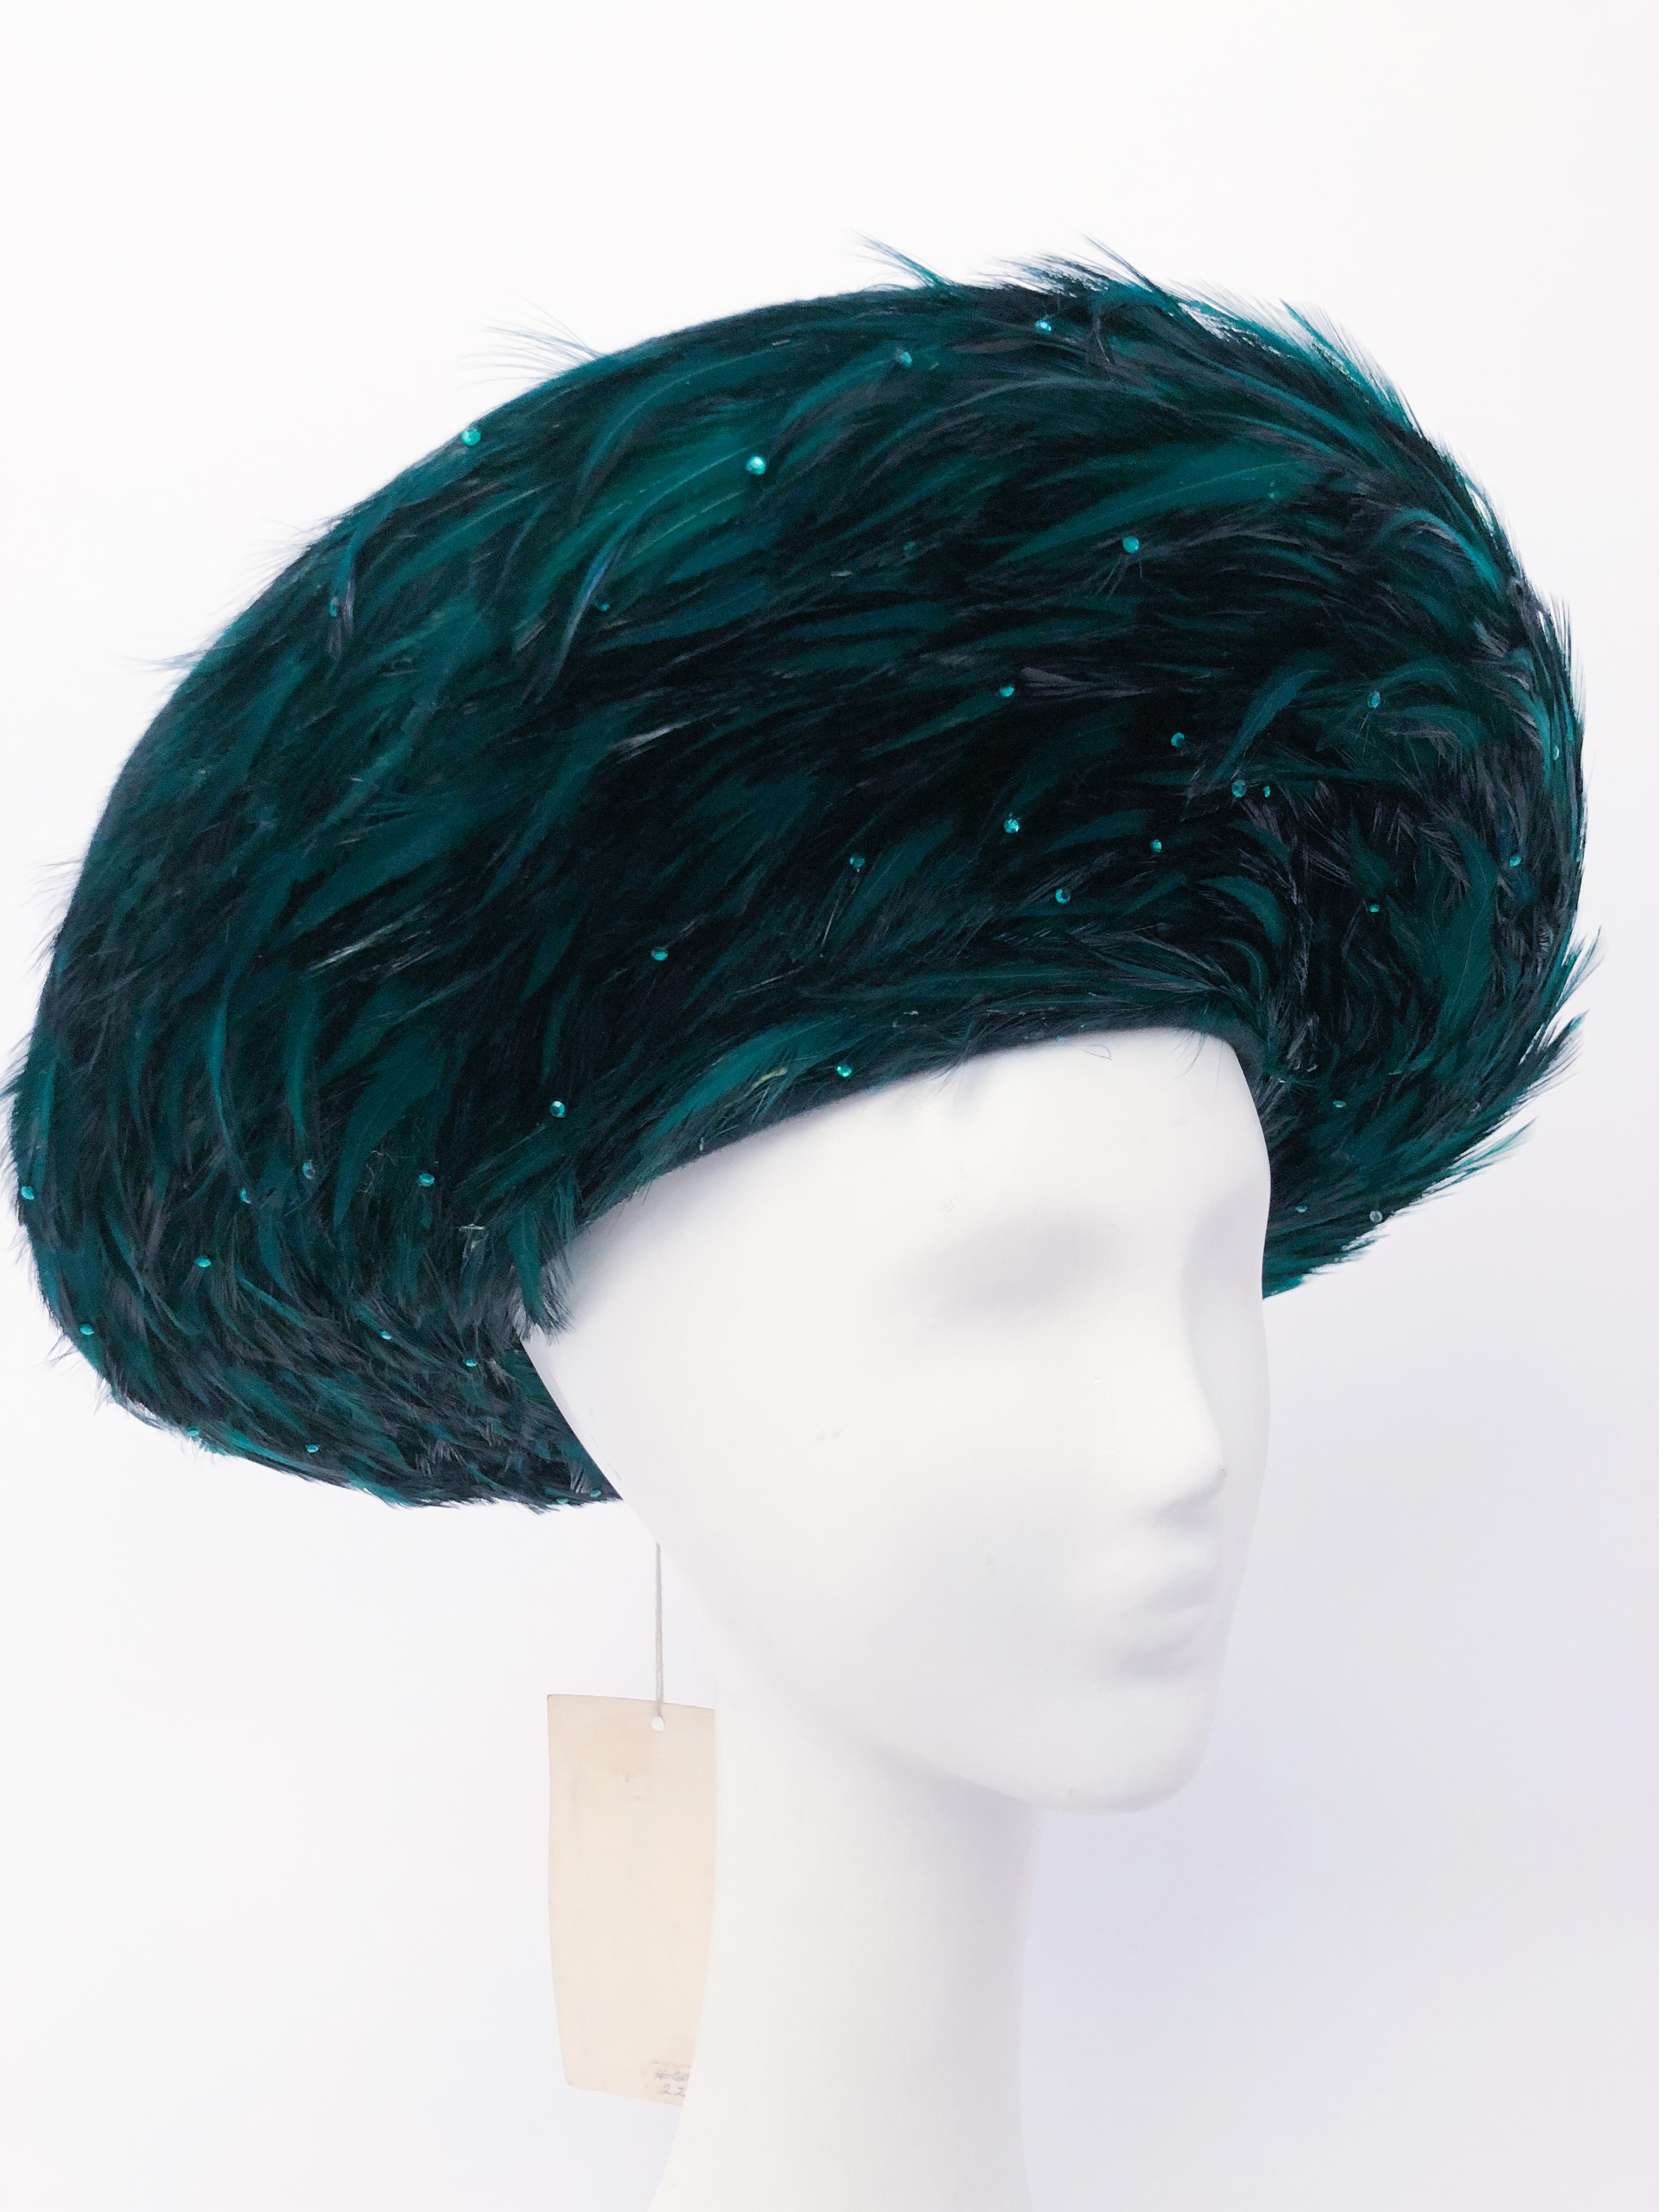 George Zamau'l Emerald Hat with Feathered Brim, 1980s  2